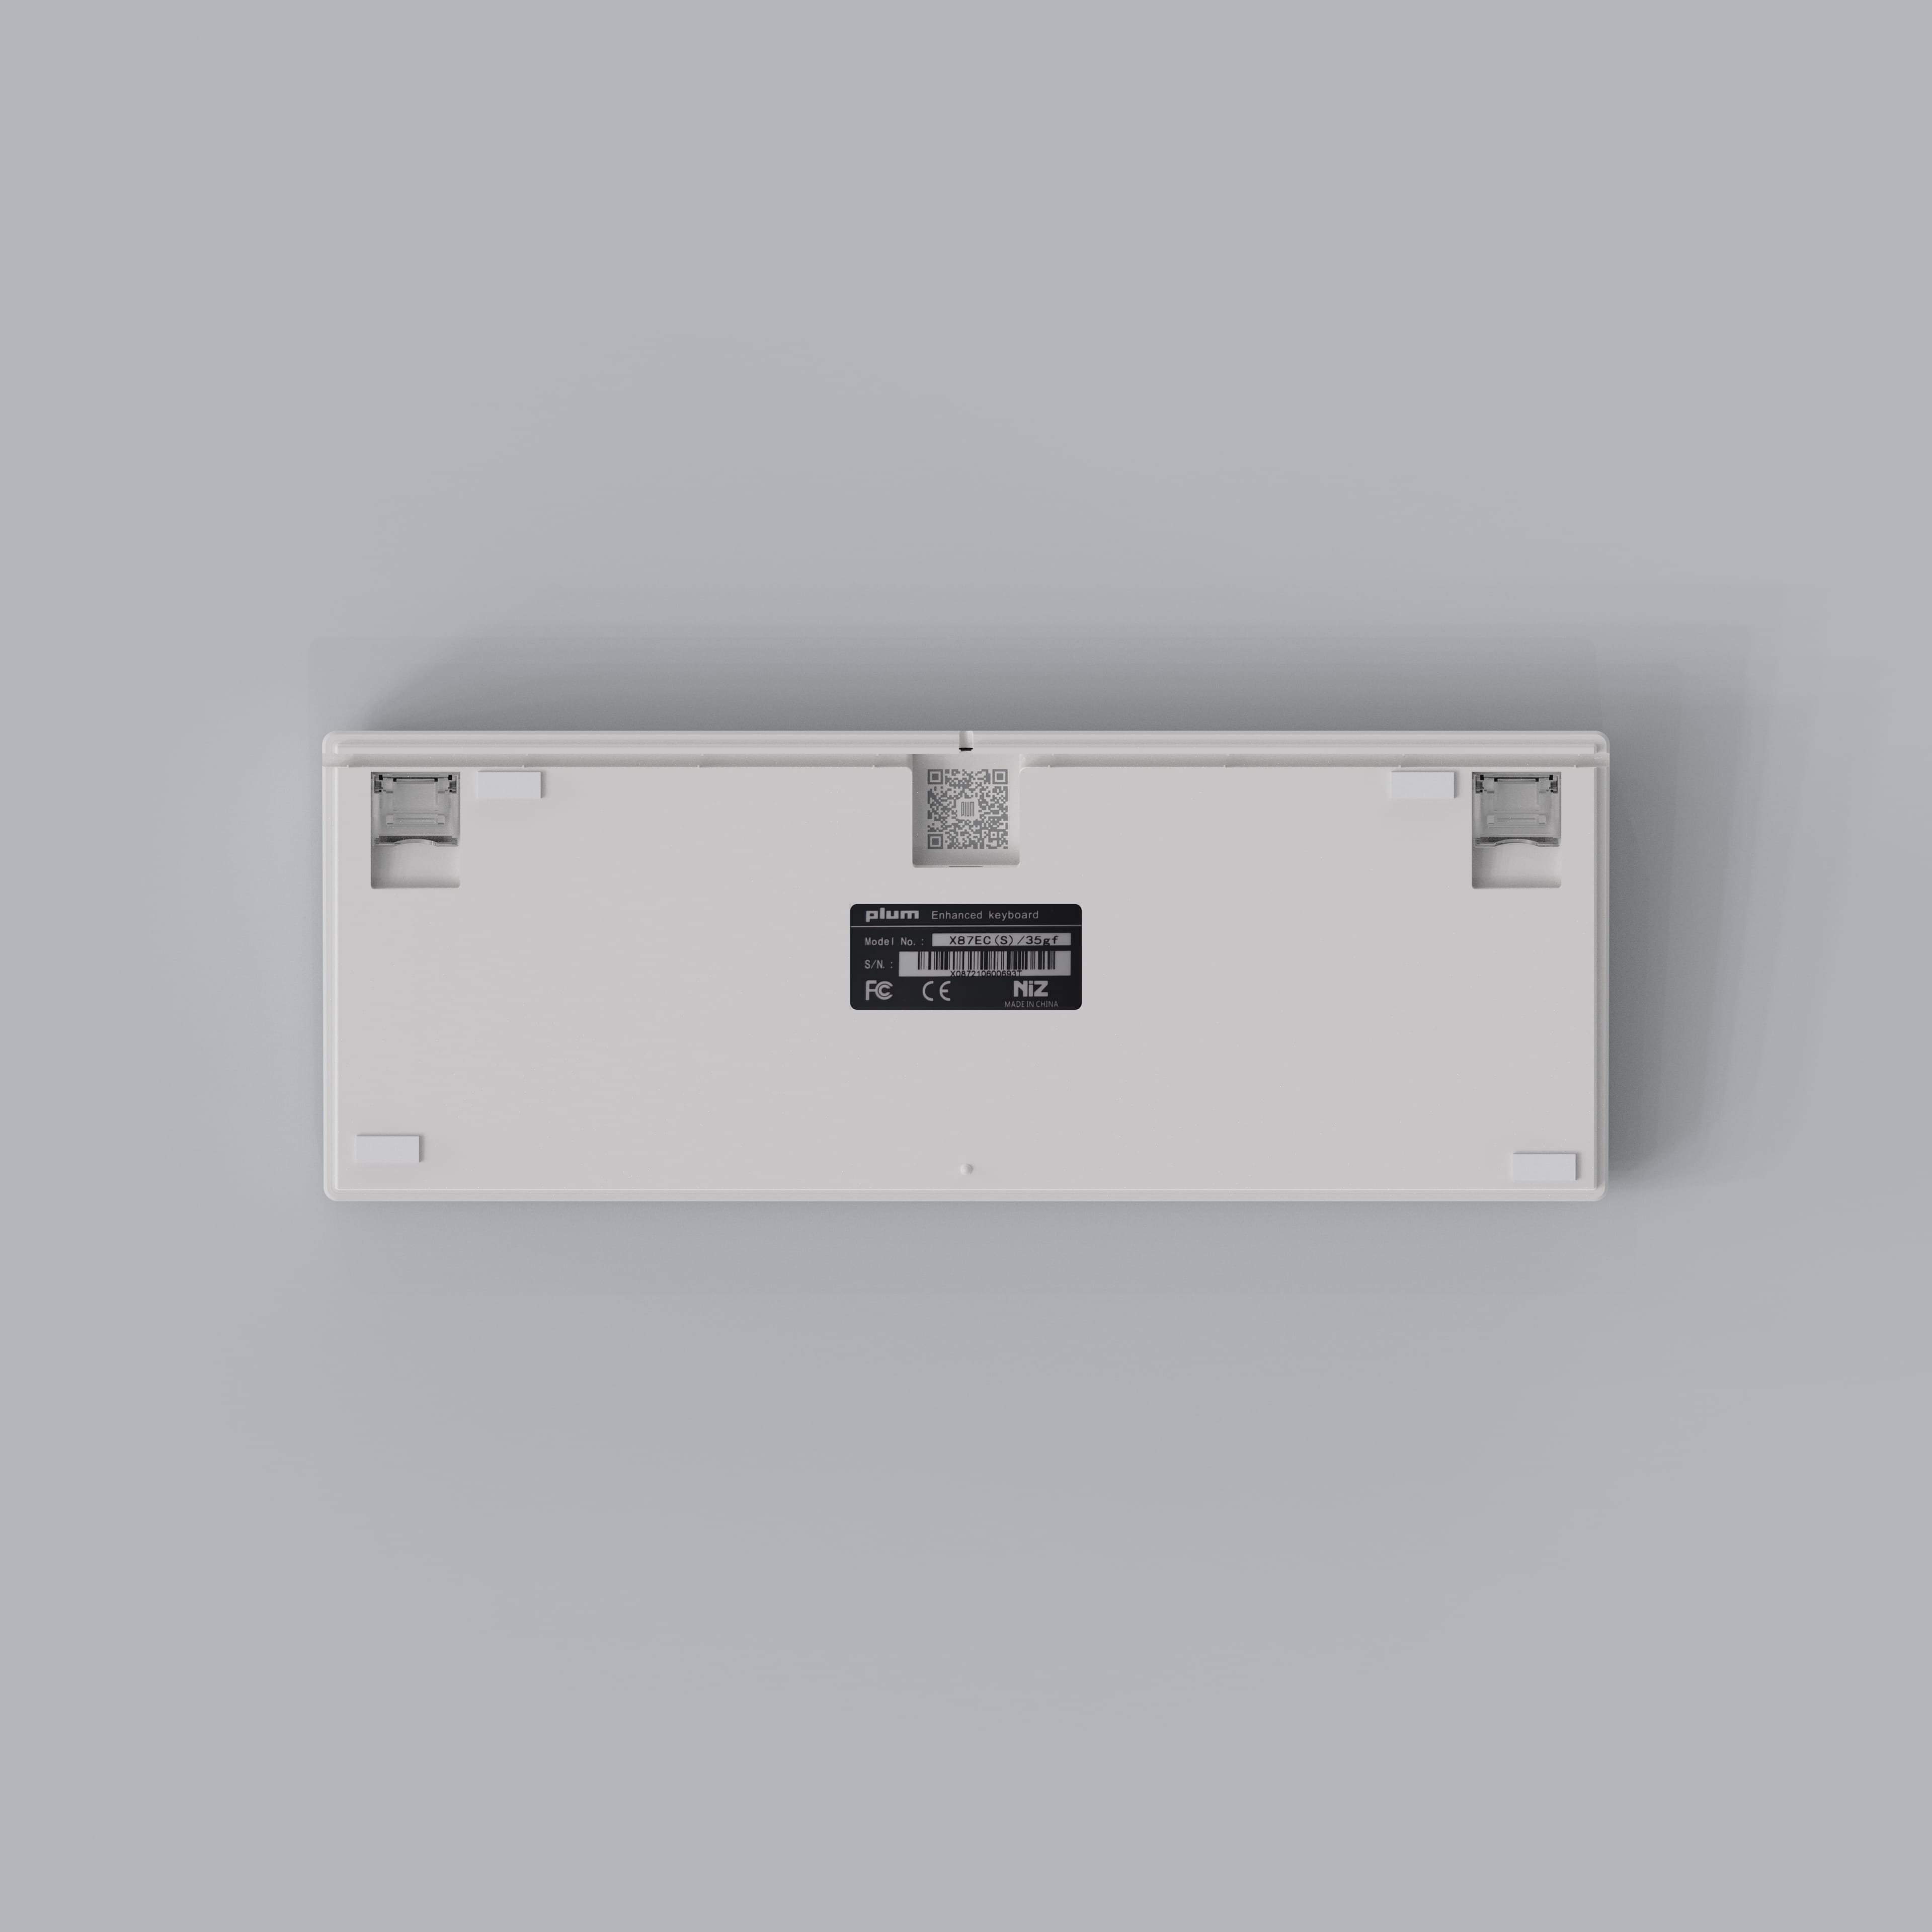 NIZ Keyboard X87 White/Black Capacitive Keyboard